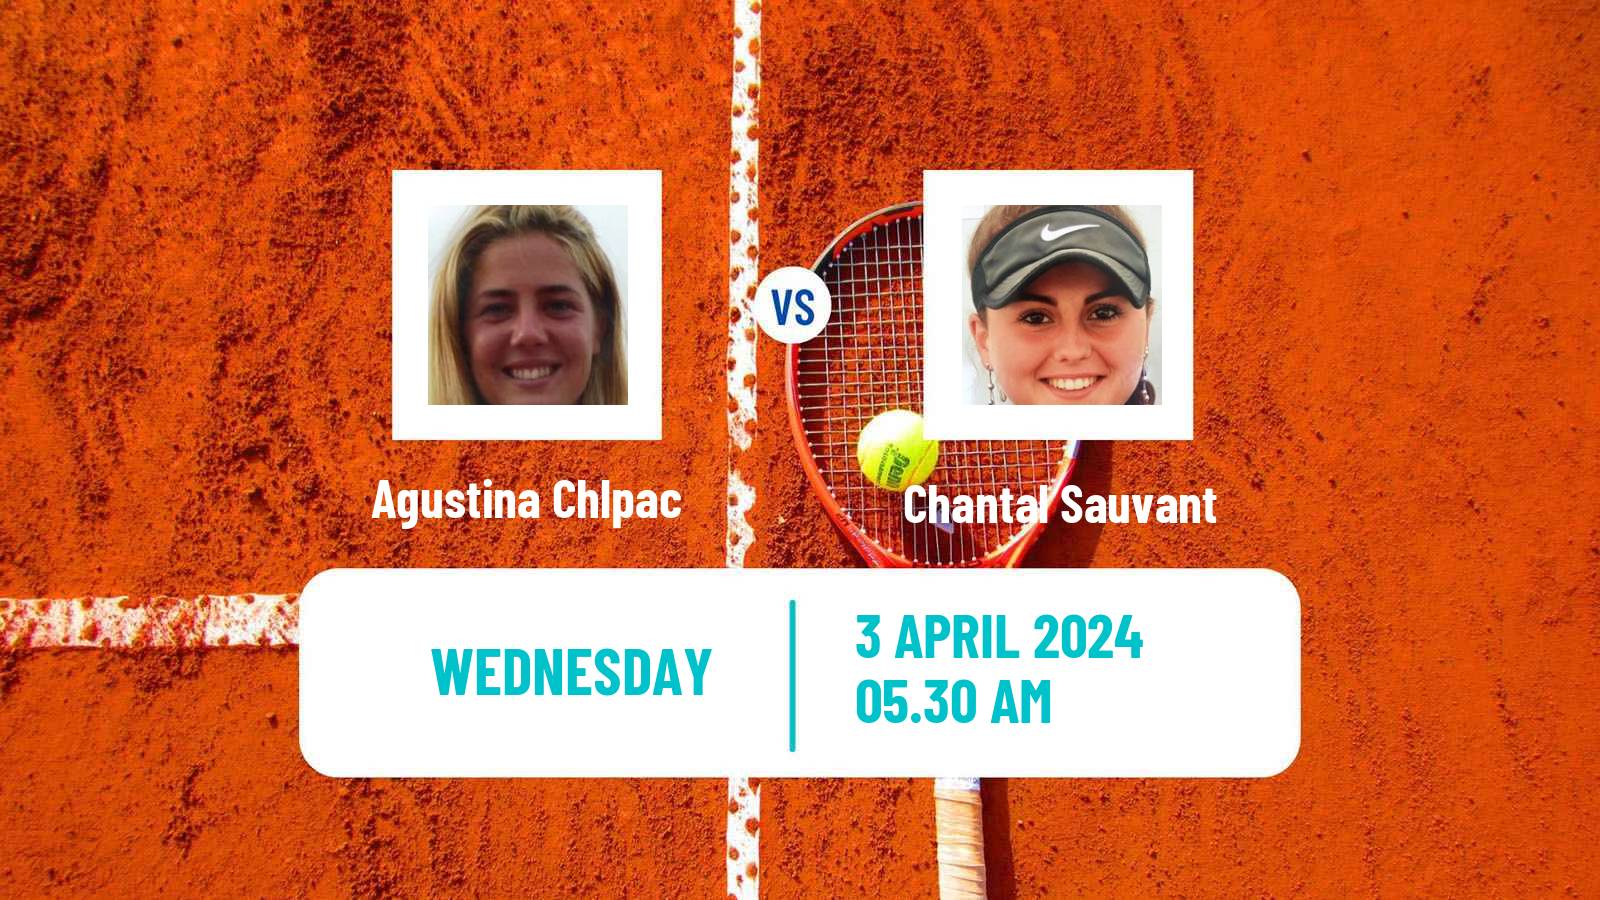 Tennis ITF W15 Antalya 8 Women Agustina Chlpac - Chantal Sauvant